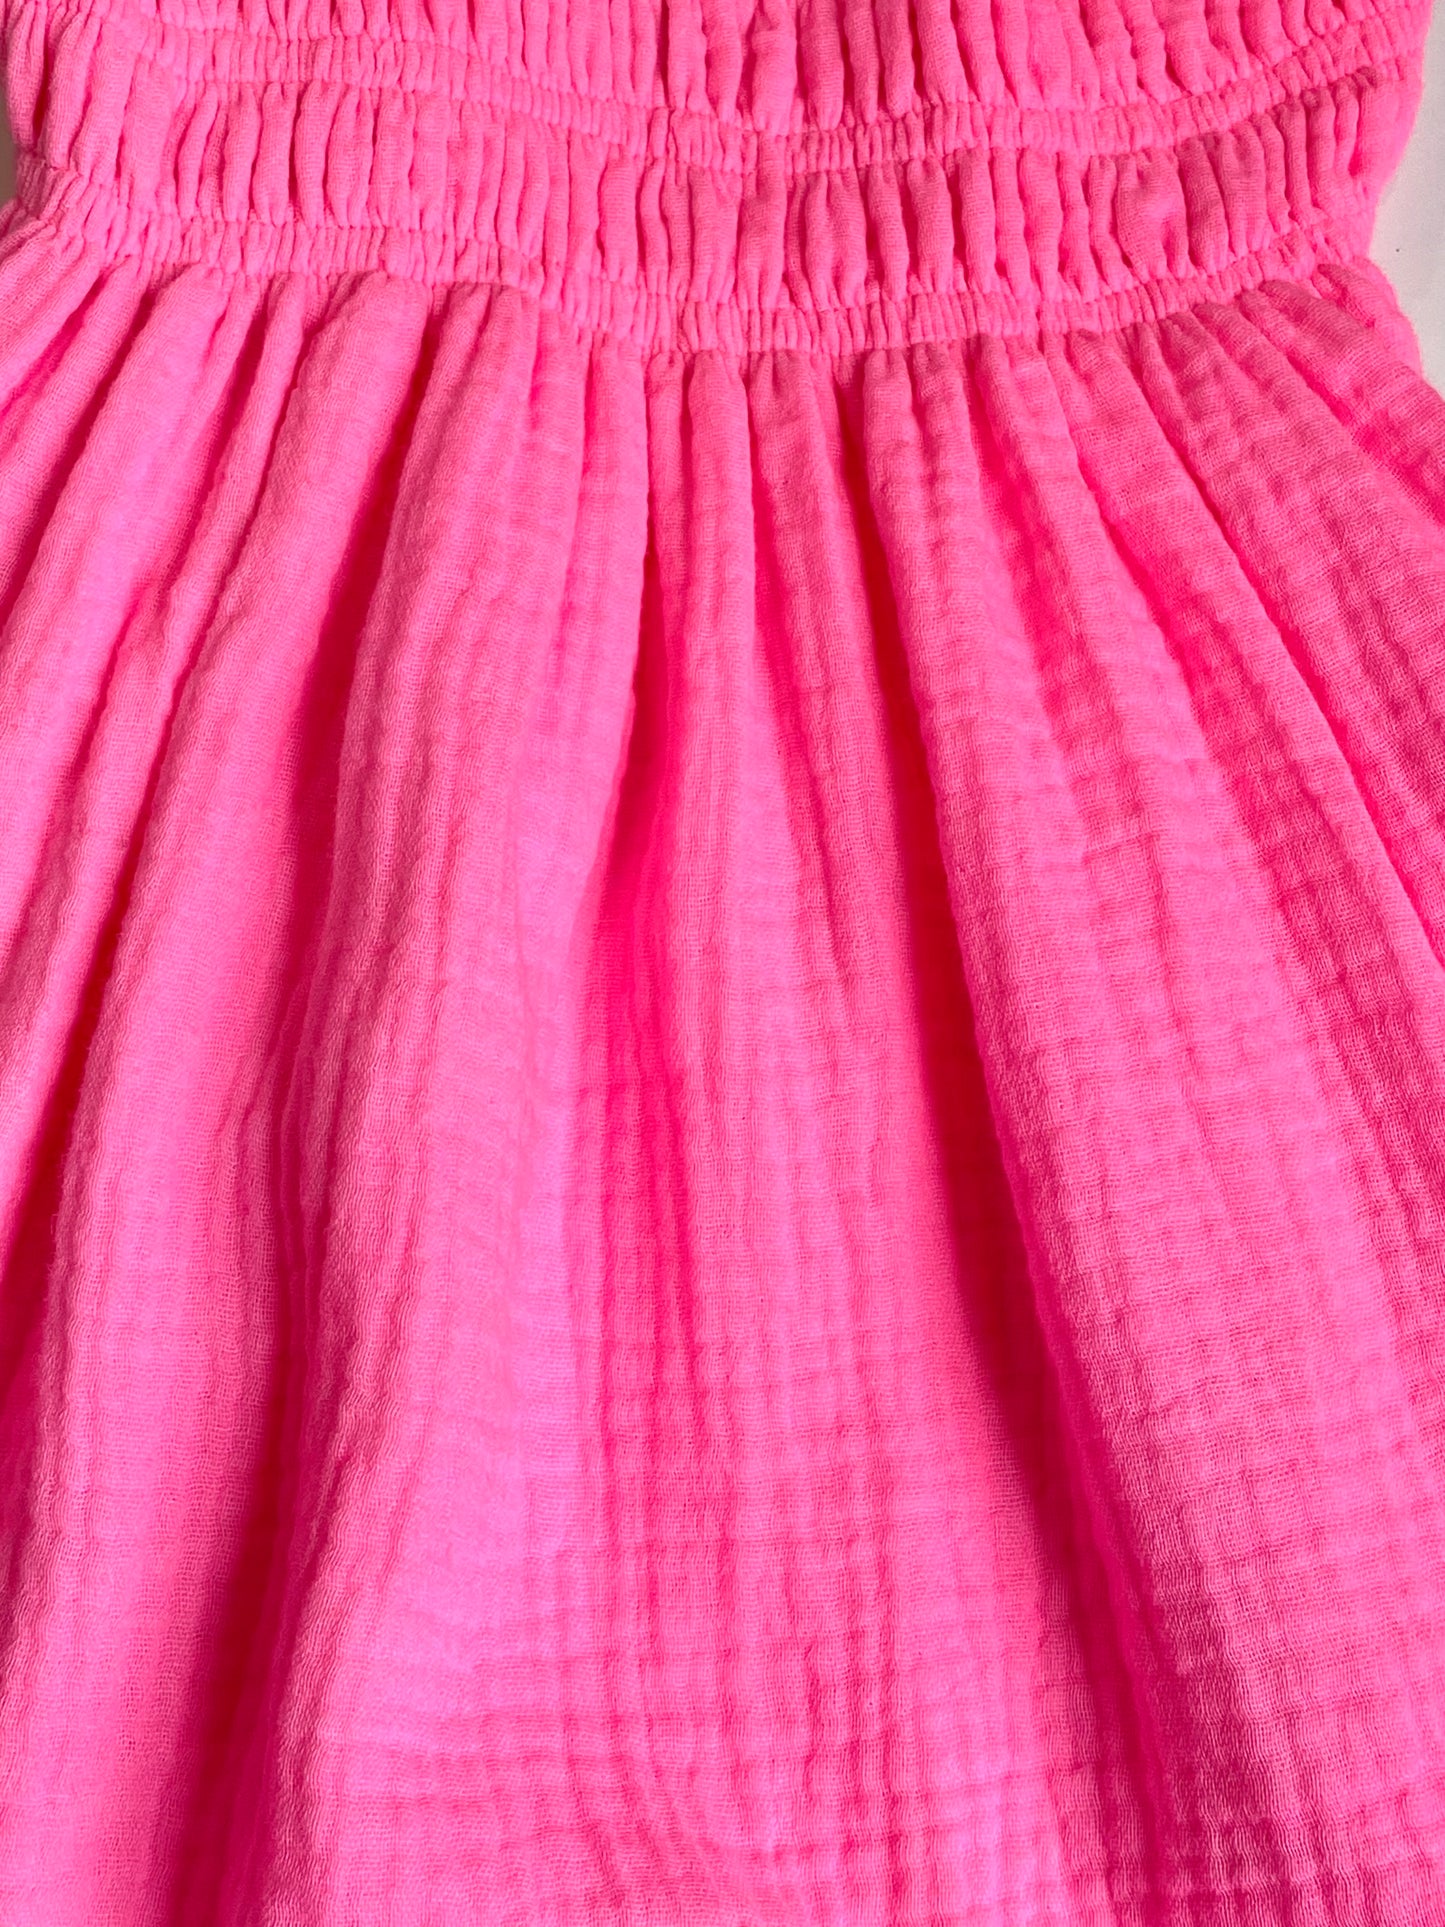 FBZ Flowers by Zoe Girls 4-6X Neon Pink Ruffle Sleeve Gauze Dress